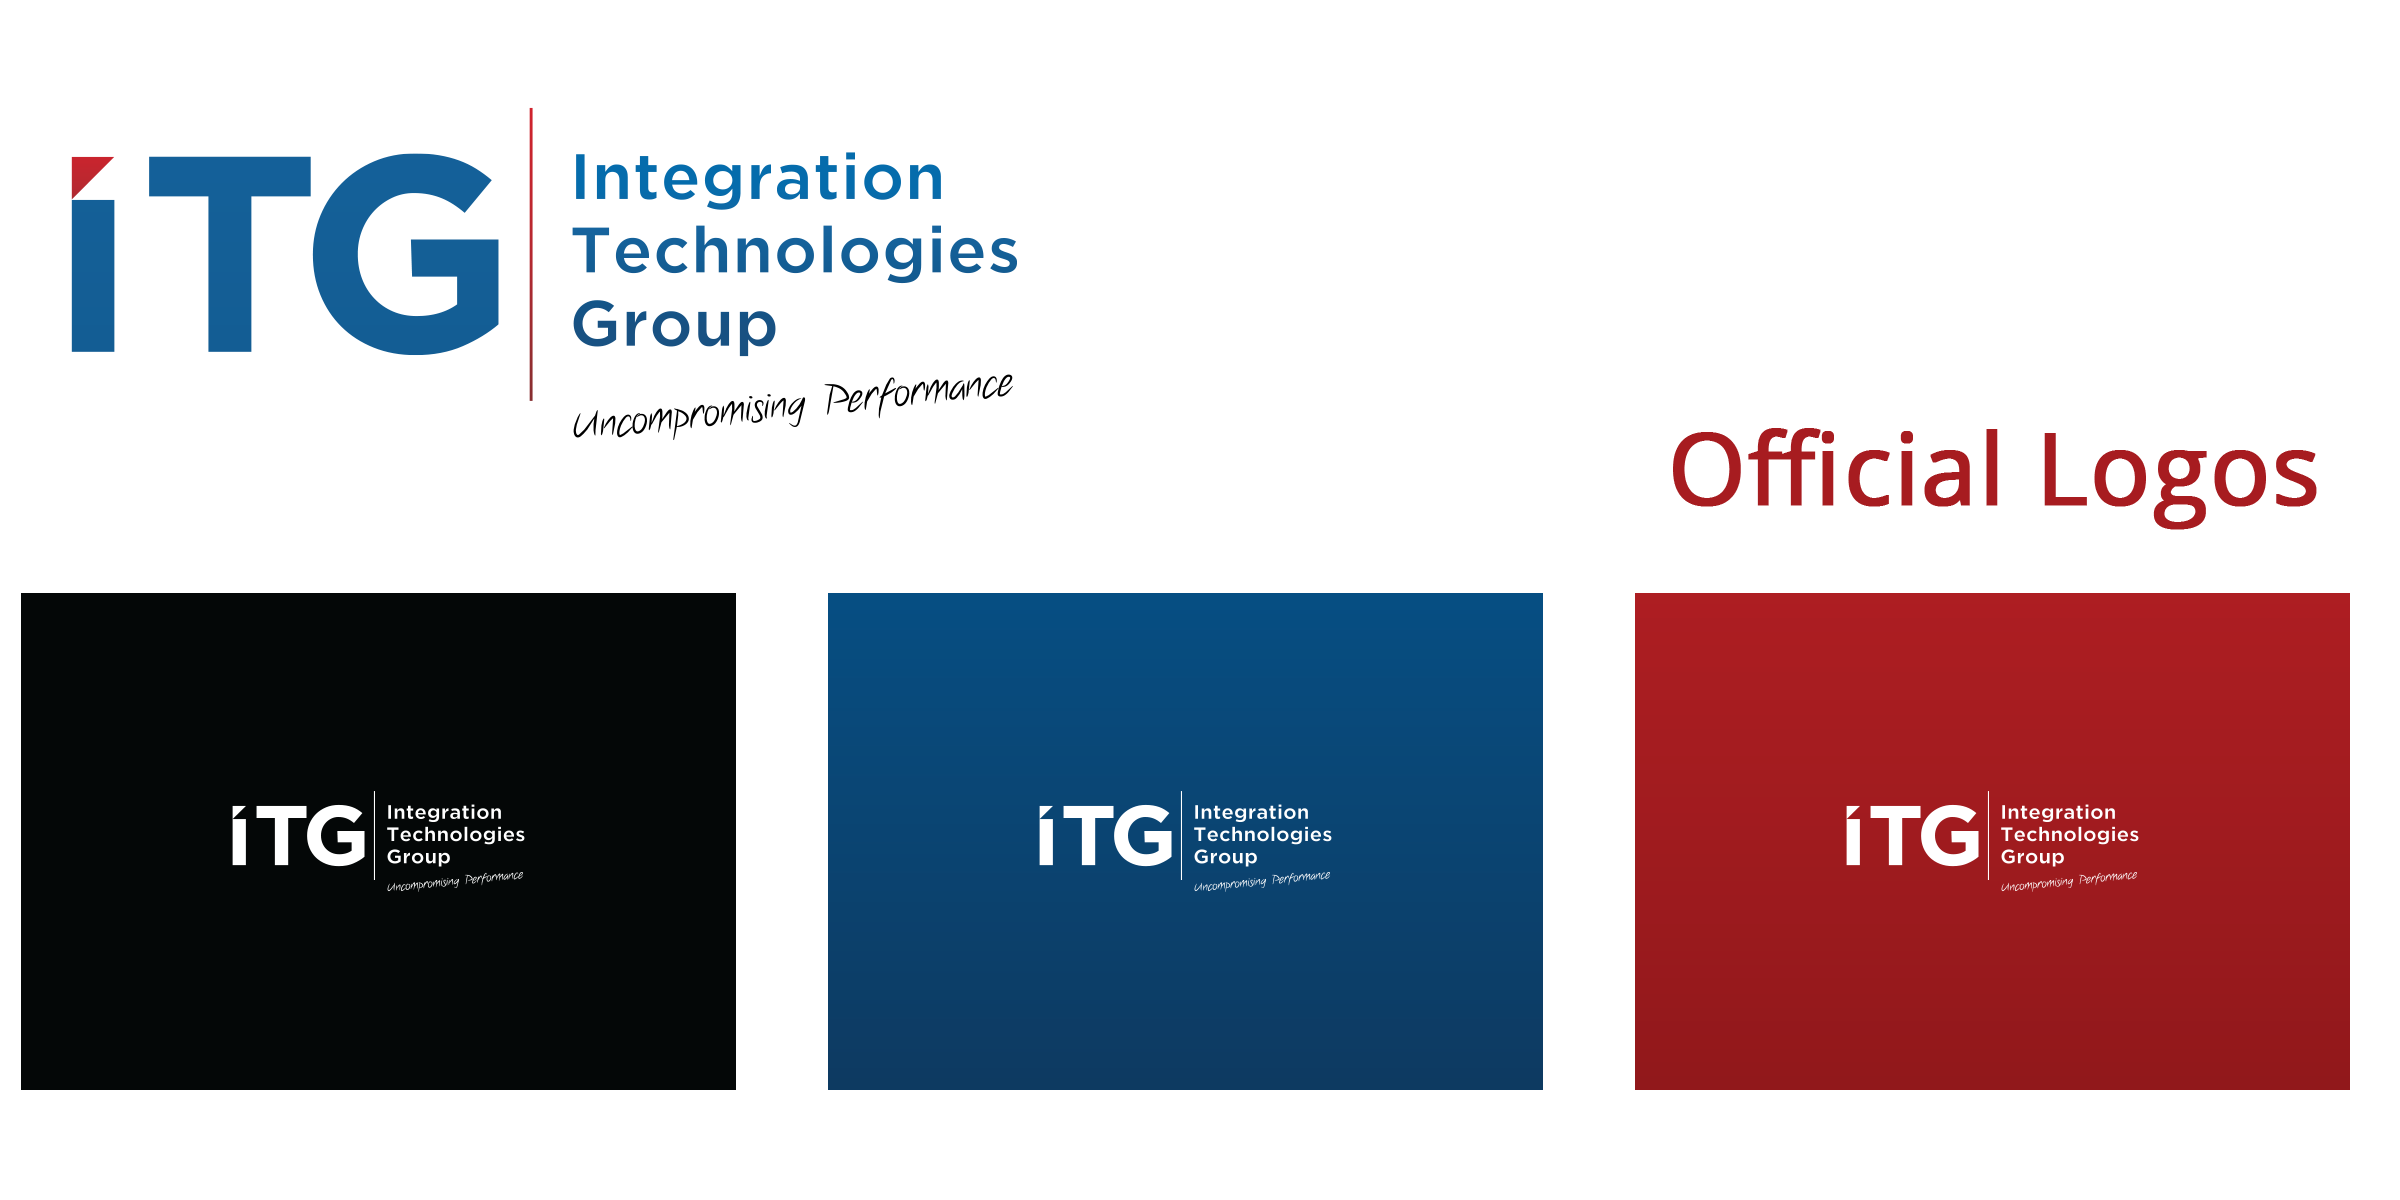 ITG Official Logos